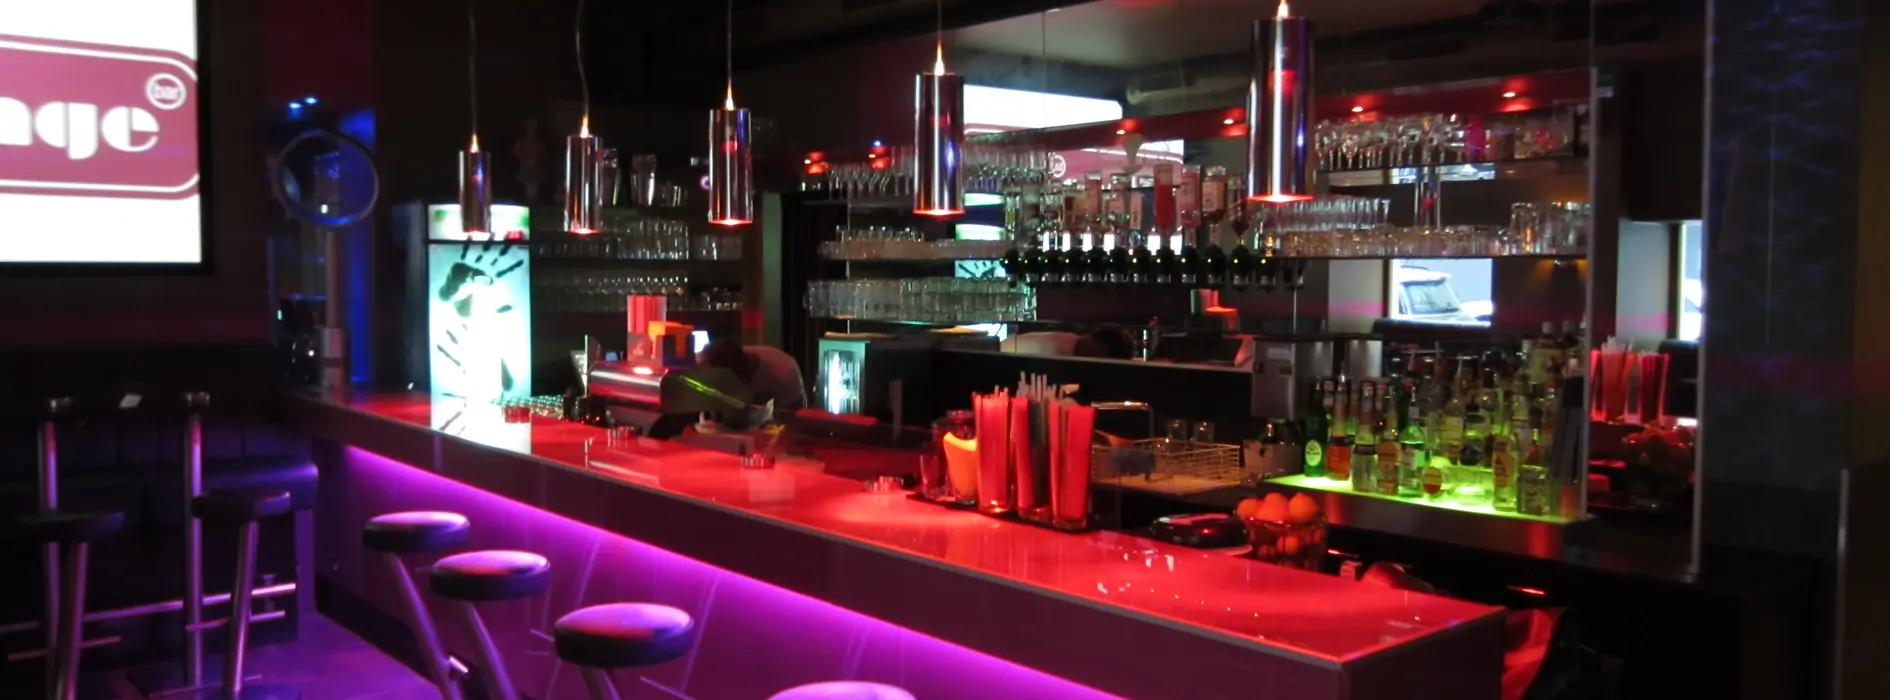 Interior shot of a bar